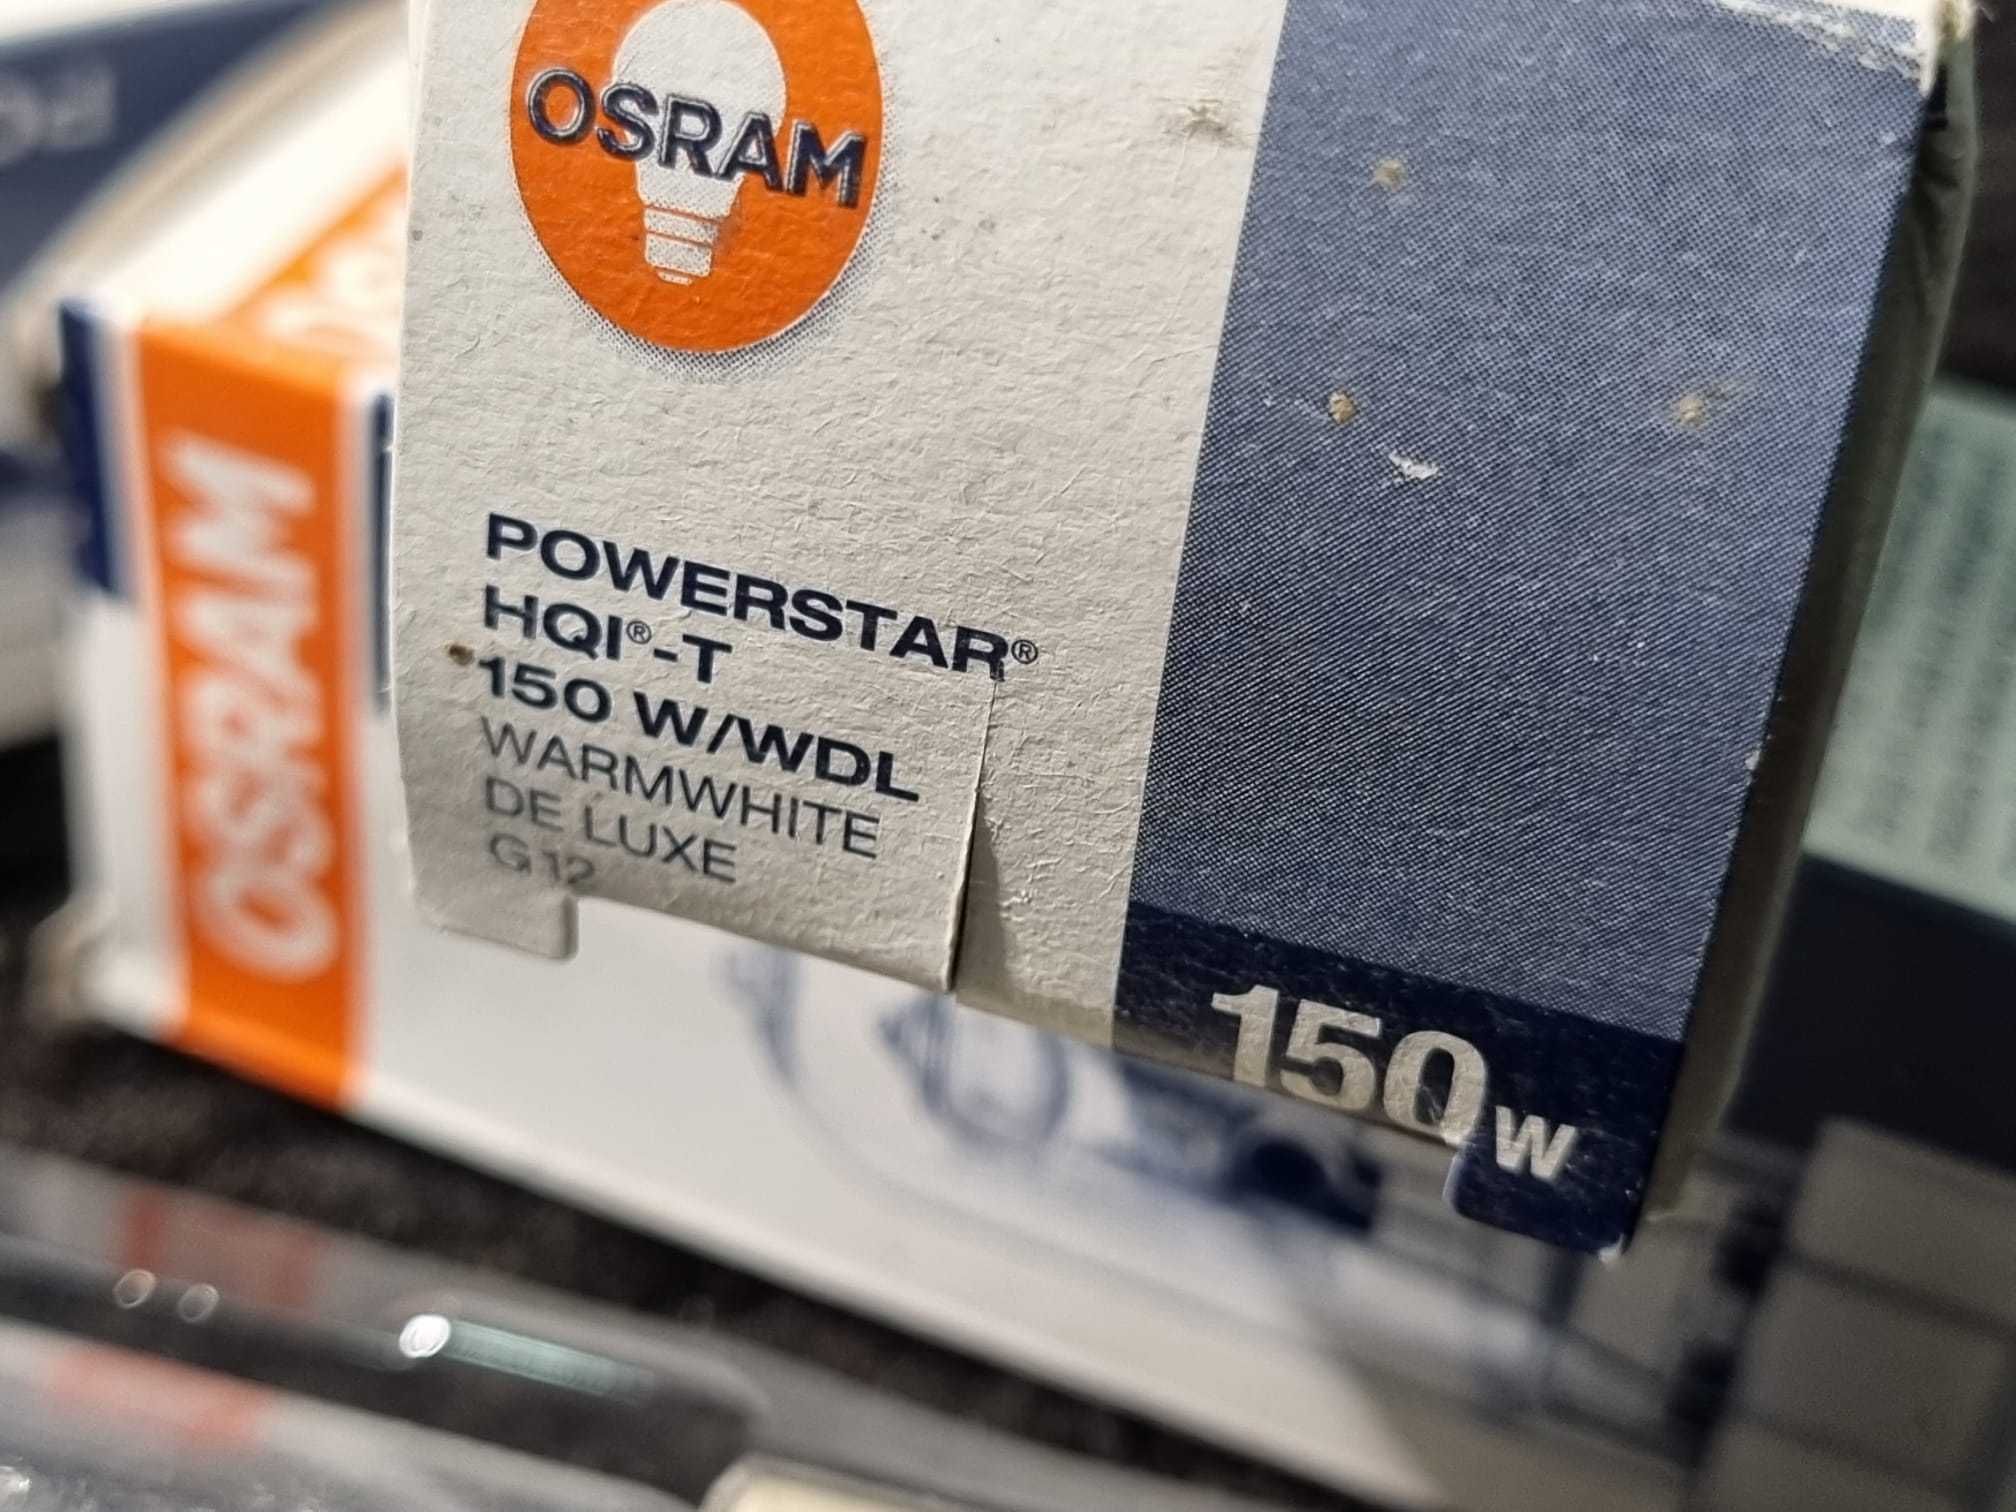 Vand becuri osram powerstar HQI-T 150W WDL warmwite G12